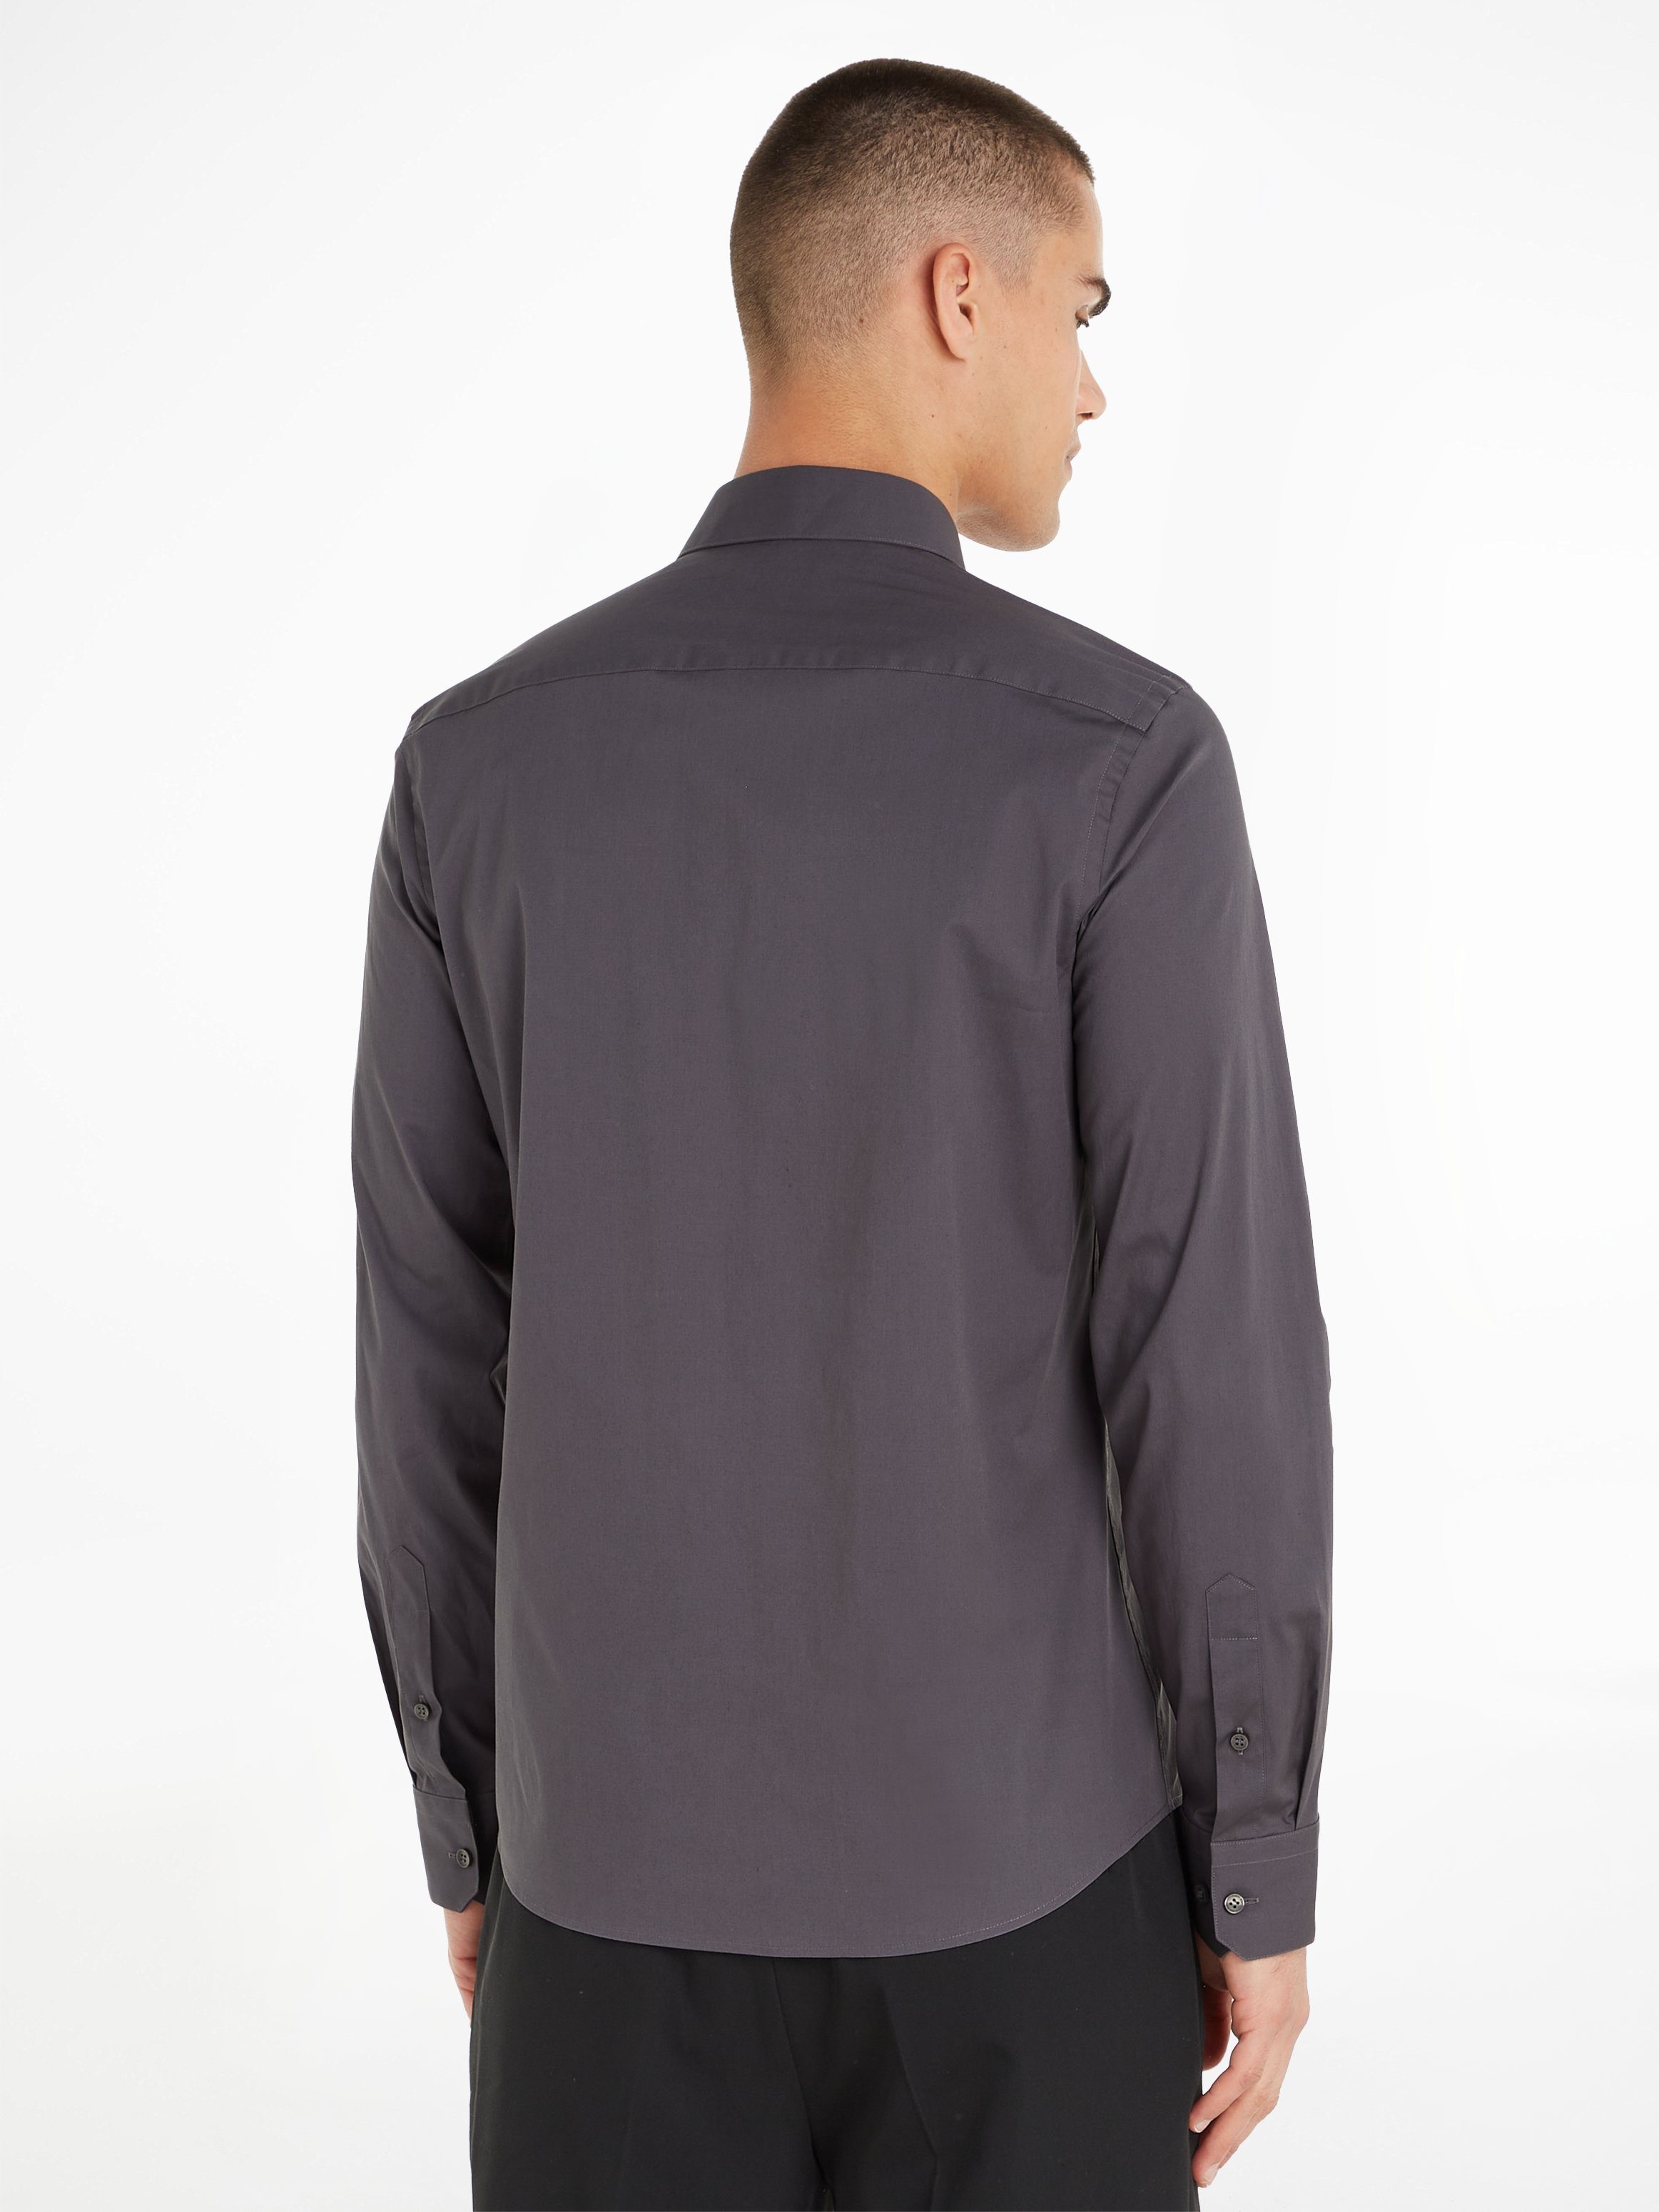 Calvin Klein Overhemd met lange mouwen SLIM FIT STRETCH POPLIN